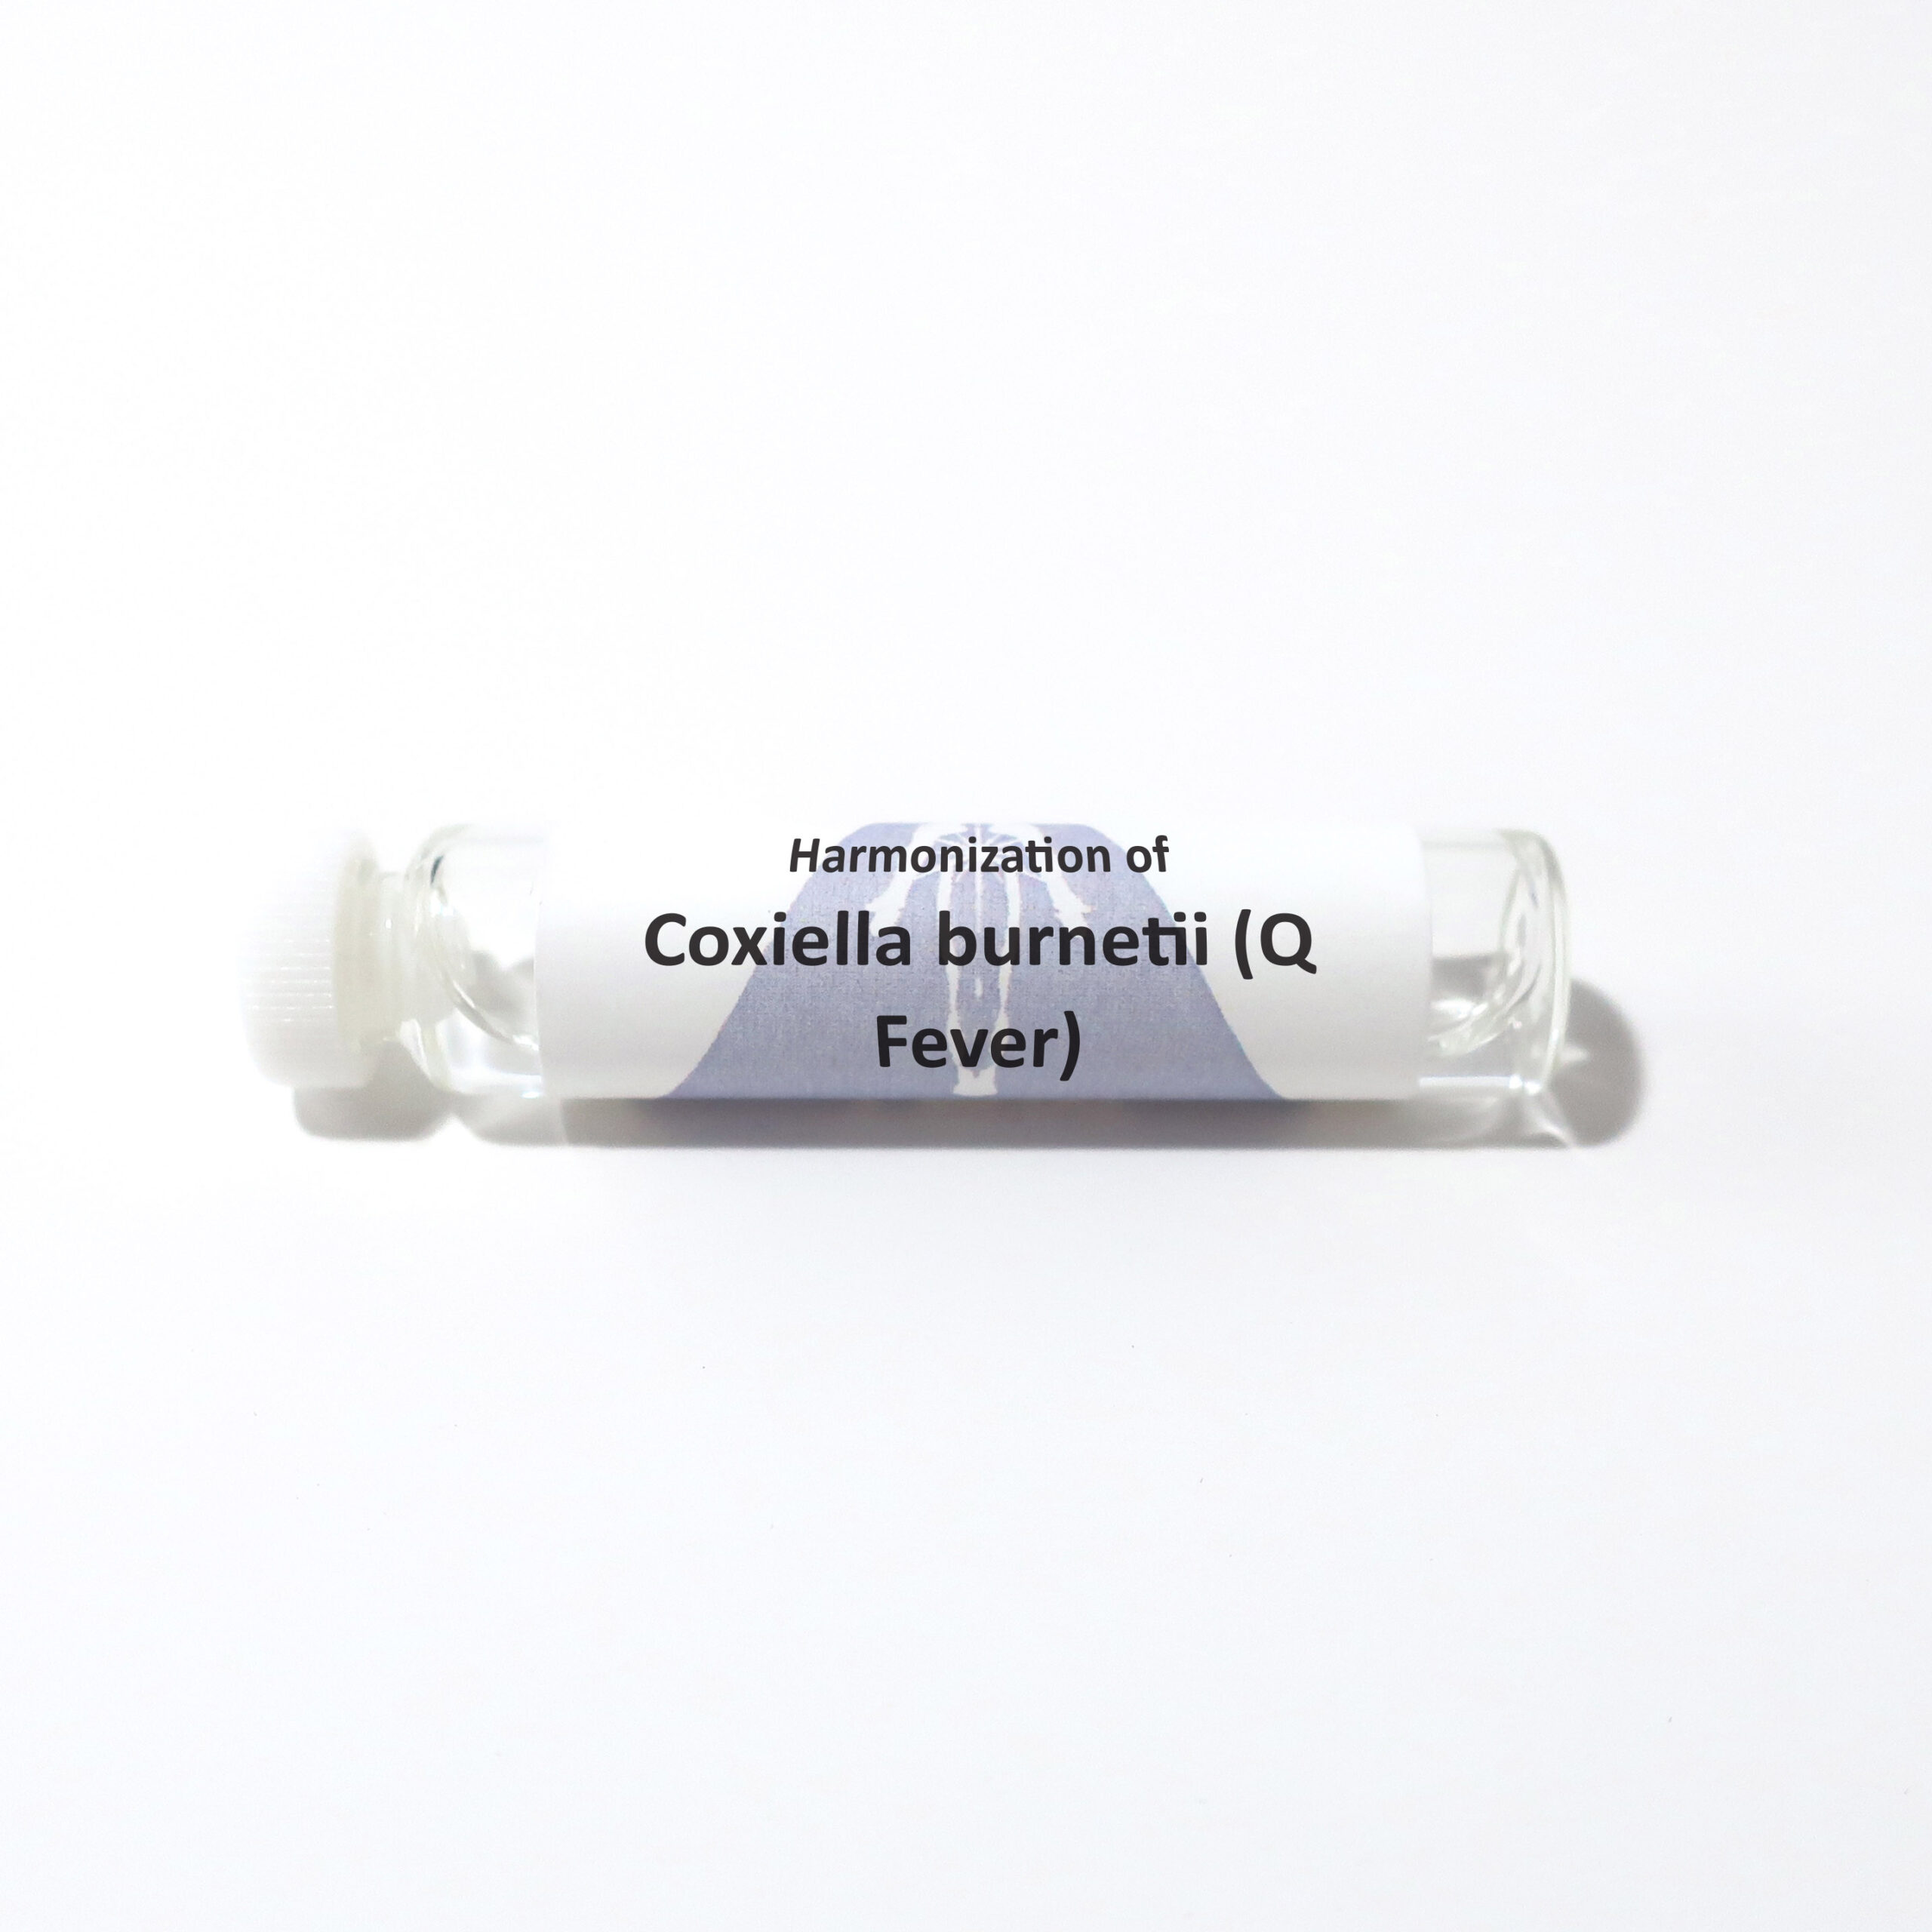 Coxiella burnetii (Q Fever)